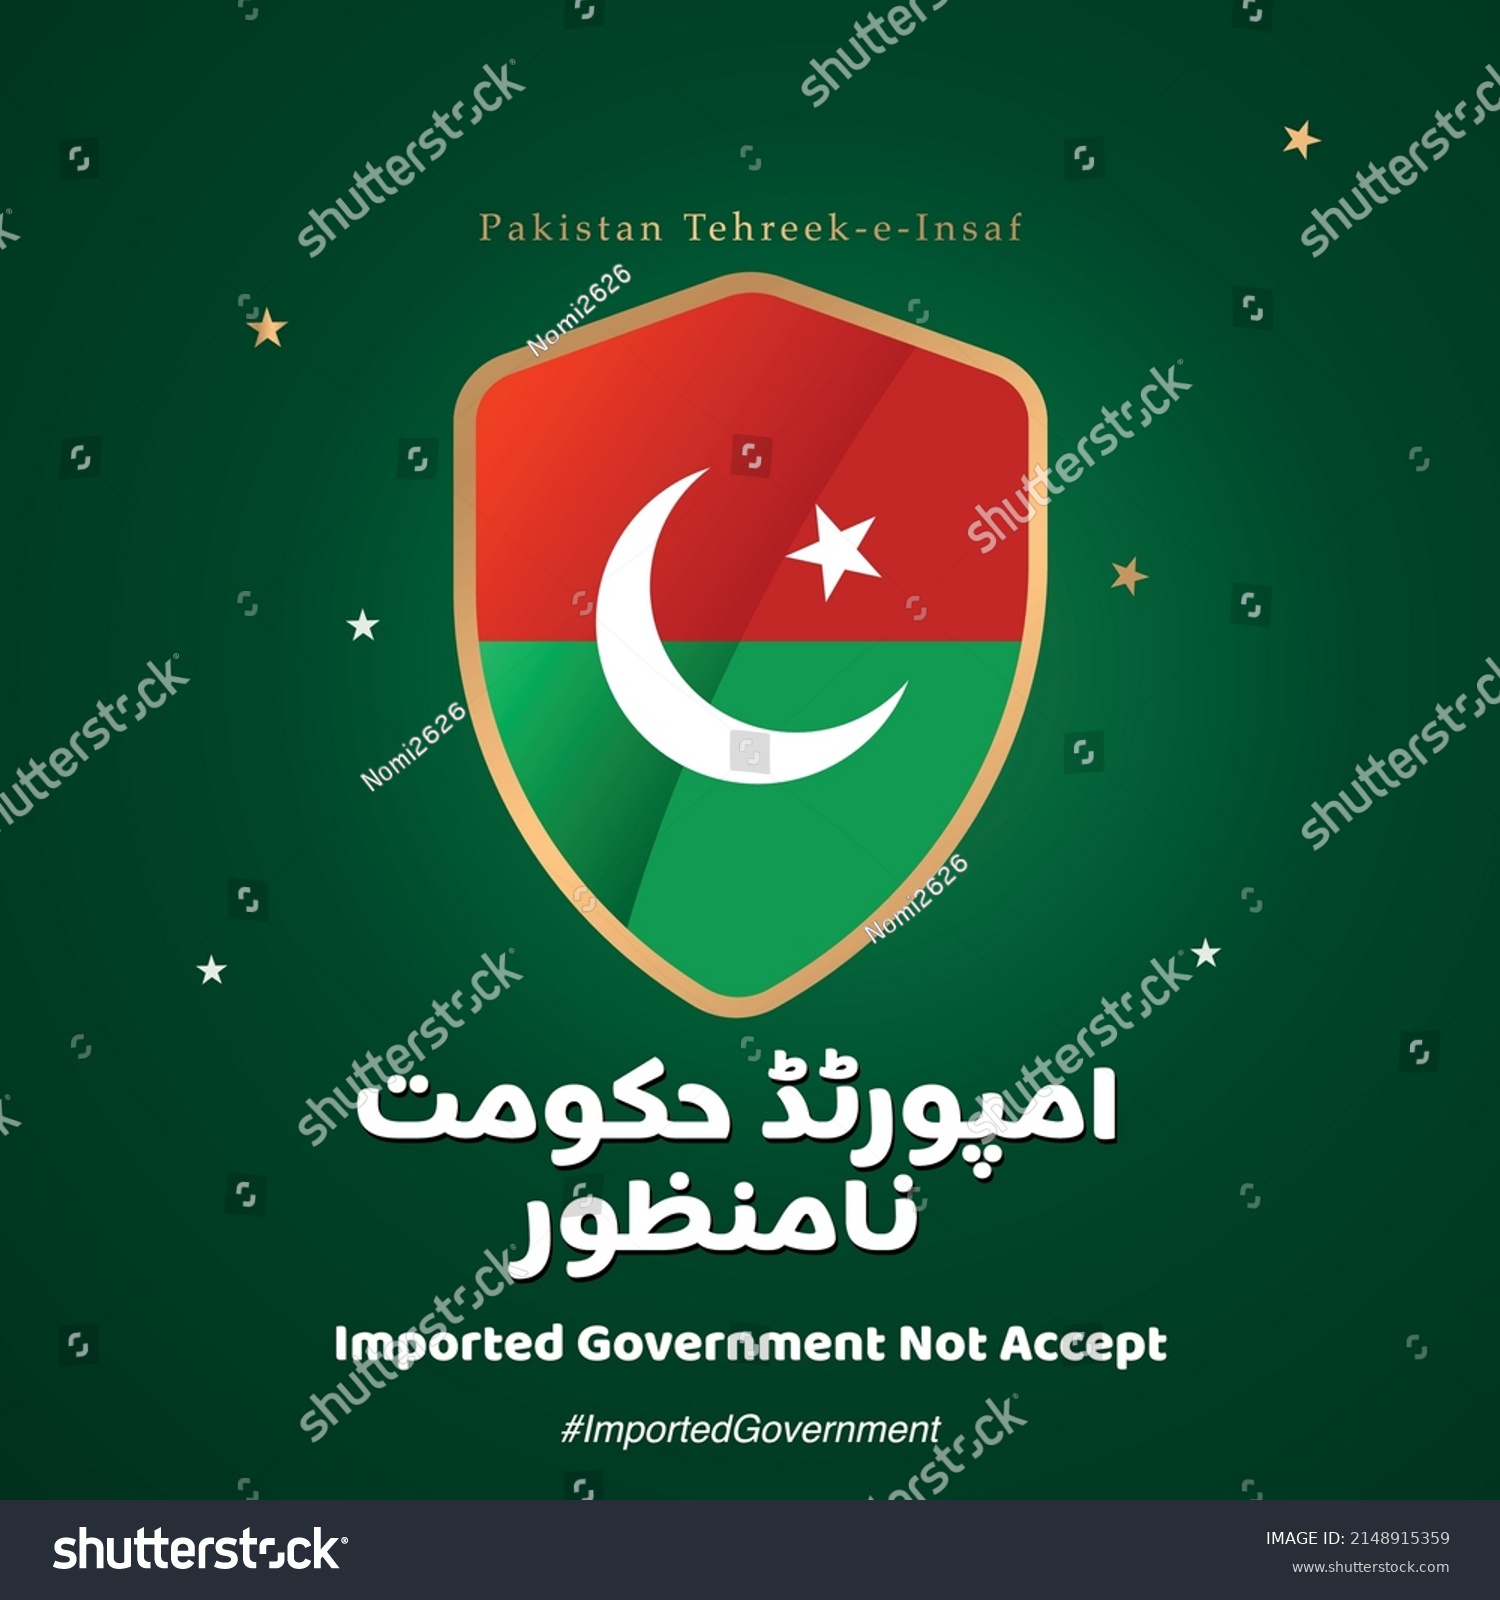 SVG of Wont accept imported govt.
Translate: Imported hukmat na manzoor urdu calligraphic.
green background. vector illustration.  svg